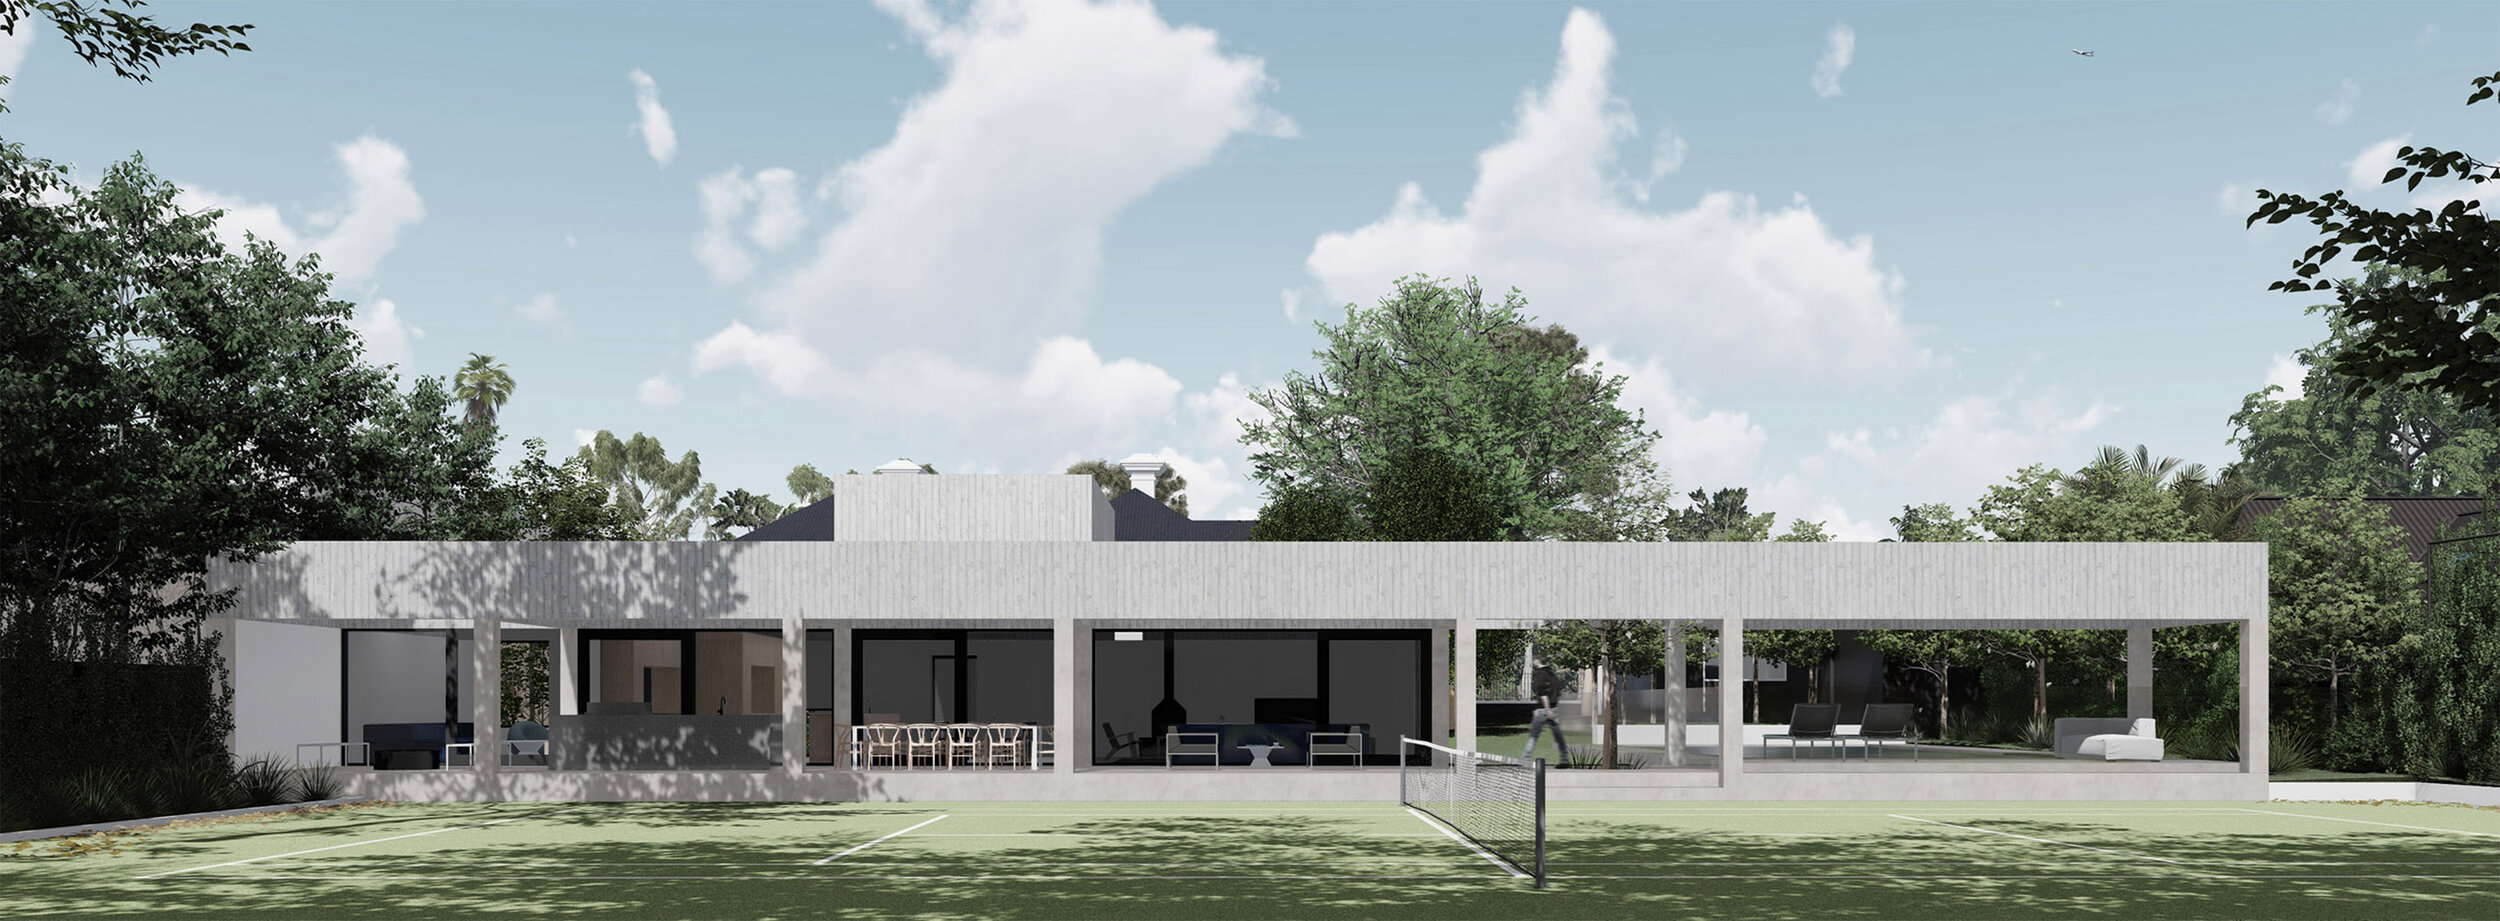 concrete-addition-tennis-court-light-high-ceiling-kensington-park.jpg.jpg